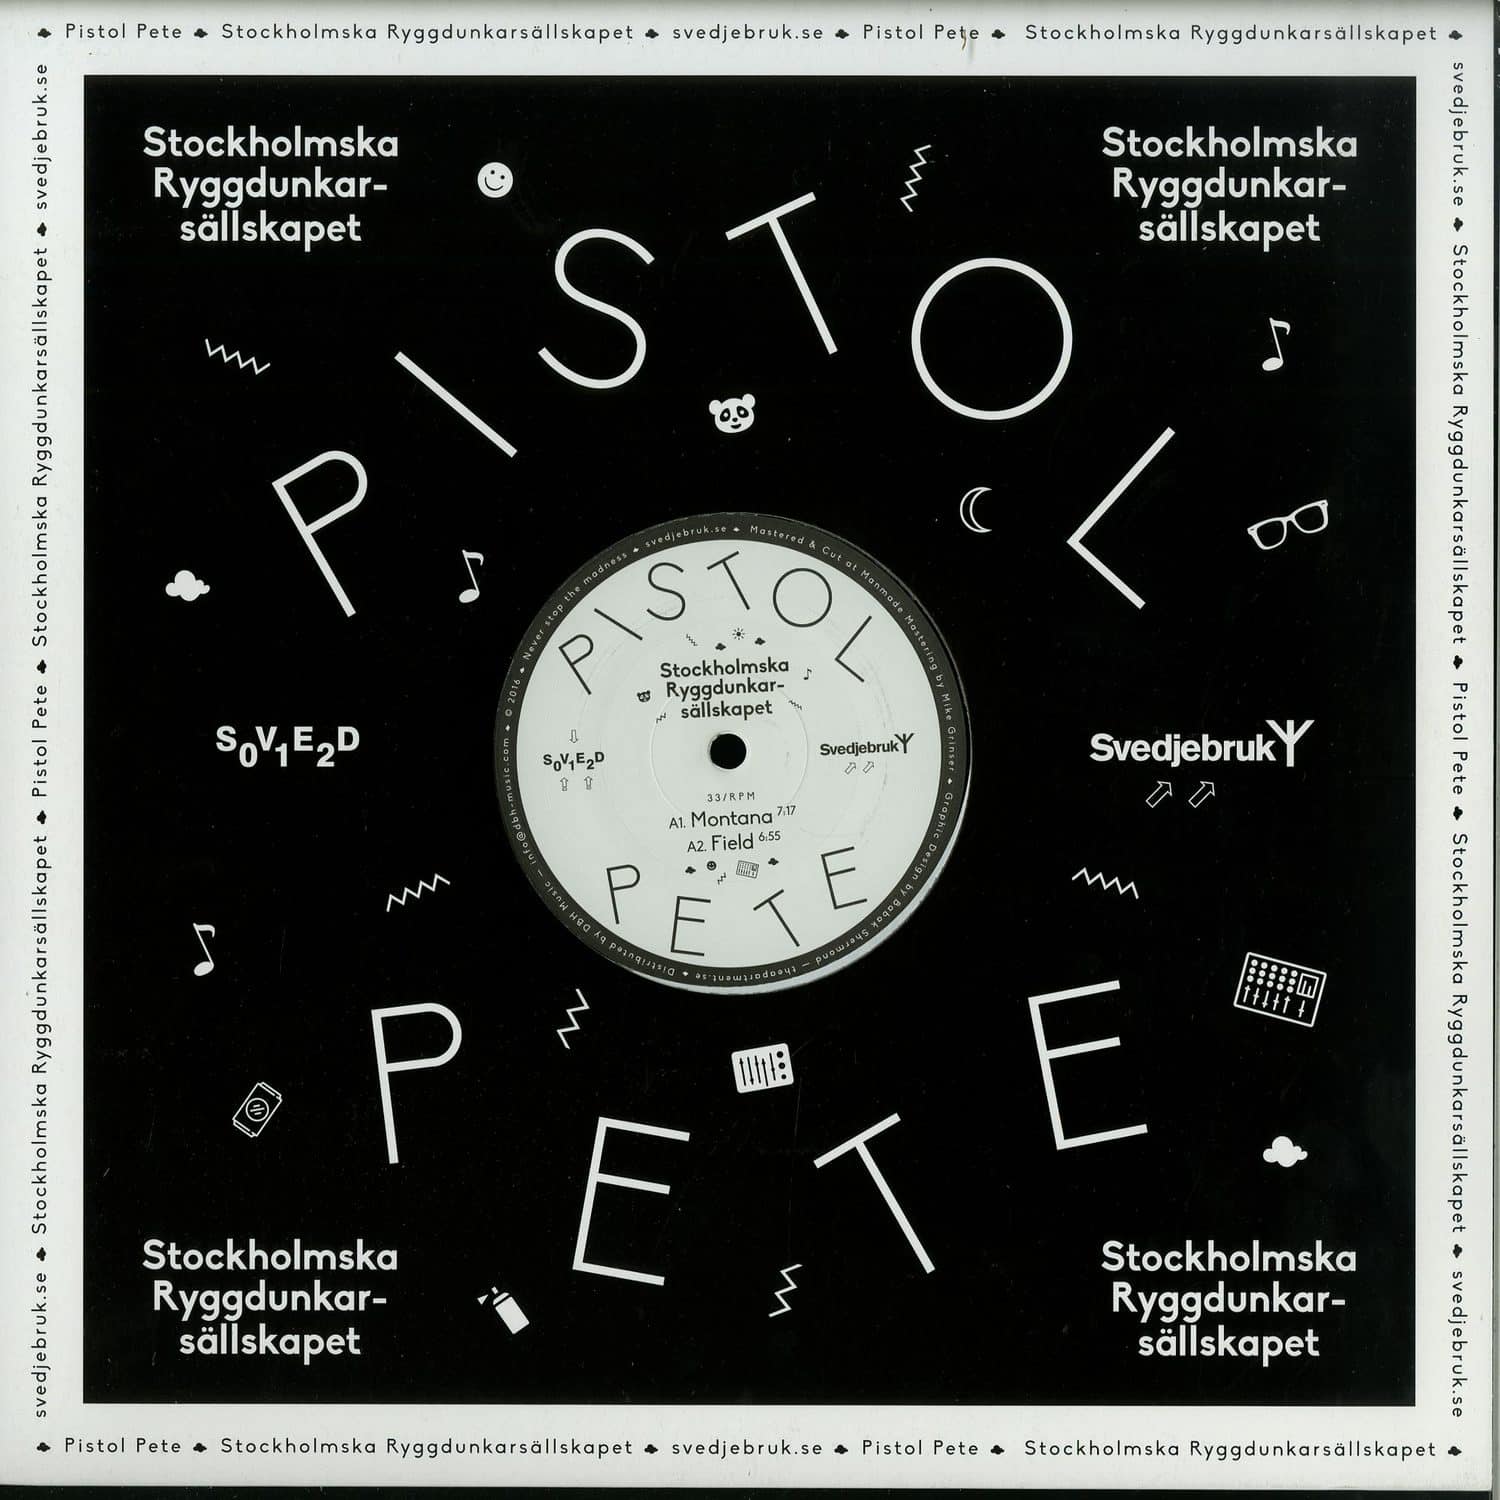 Pistol Pete - STOCKHOLMSKA RYGGDUNKAR-SALLSKAPET